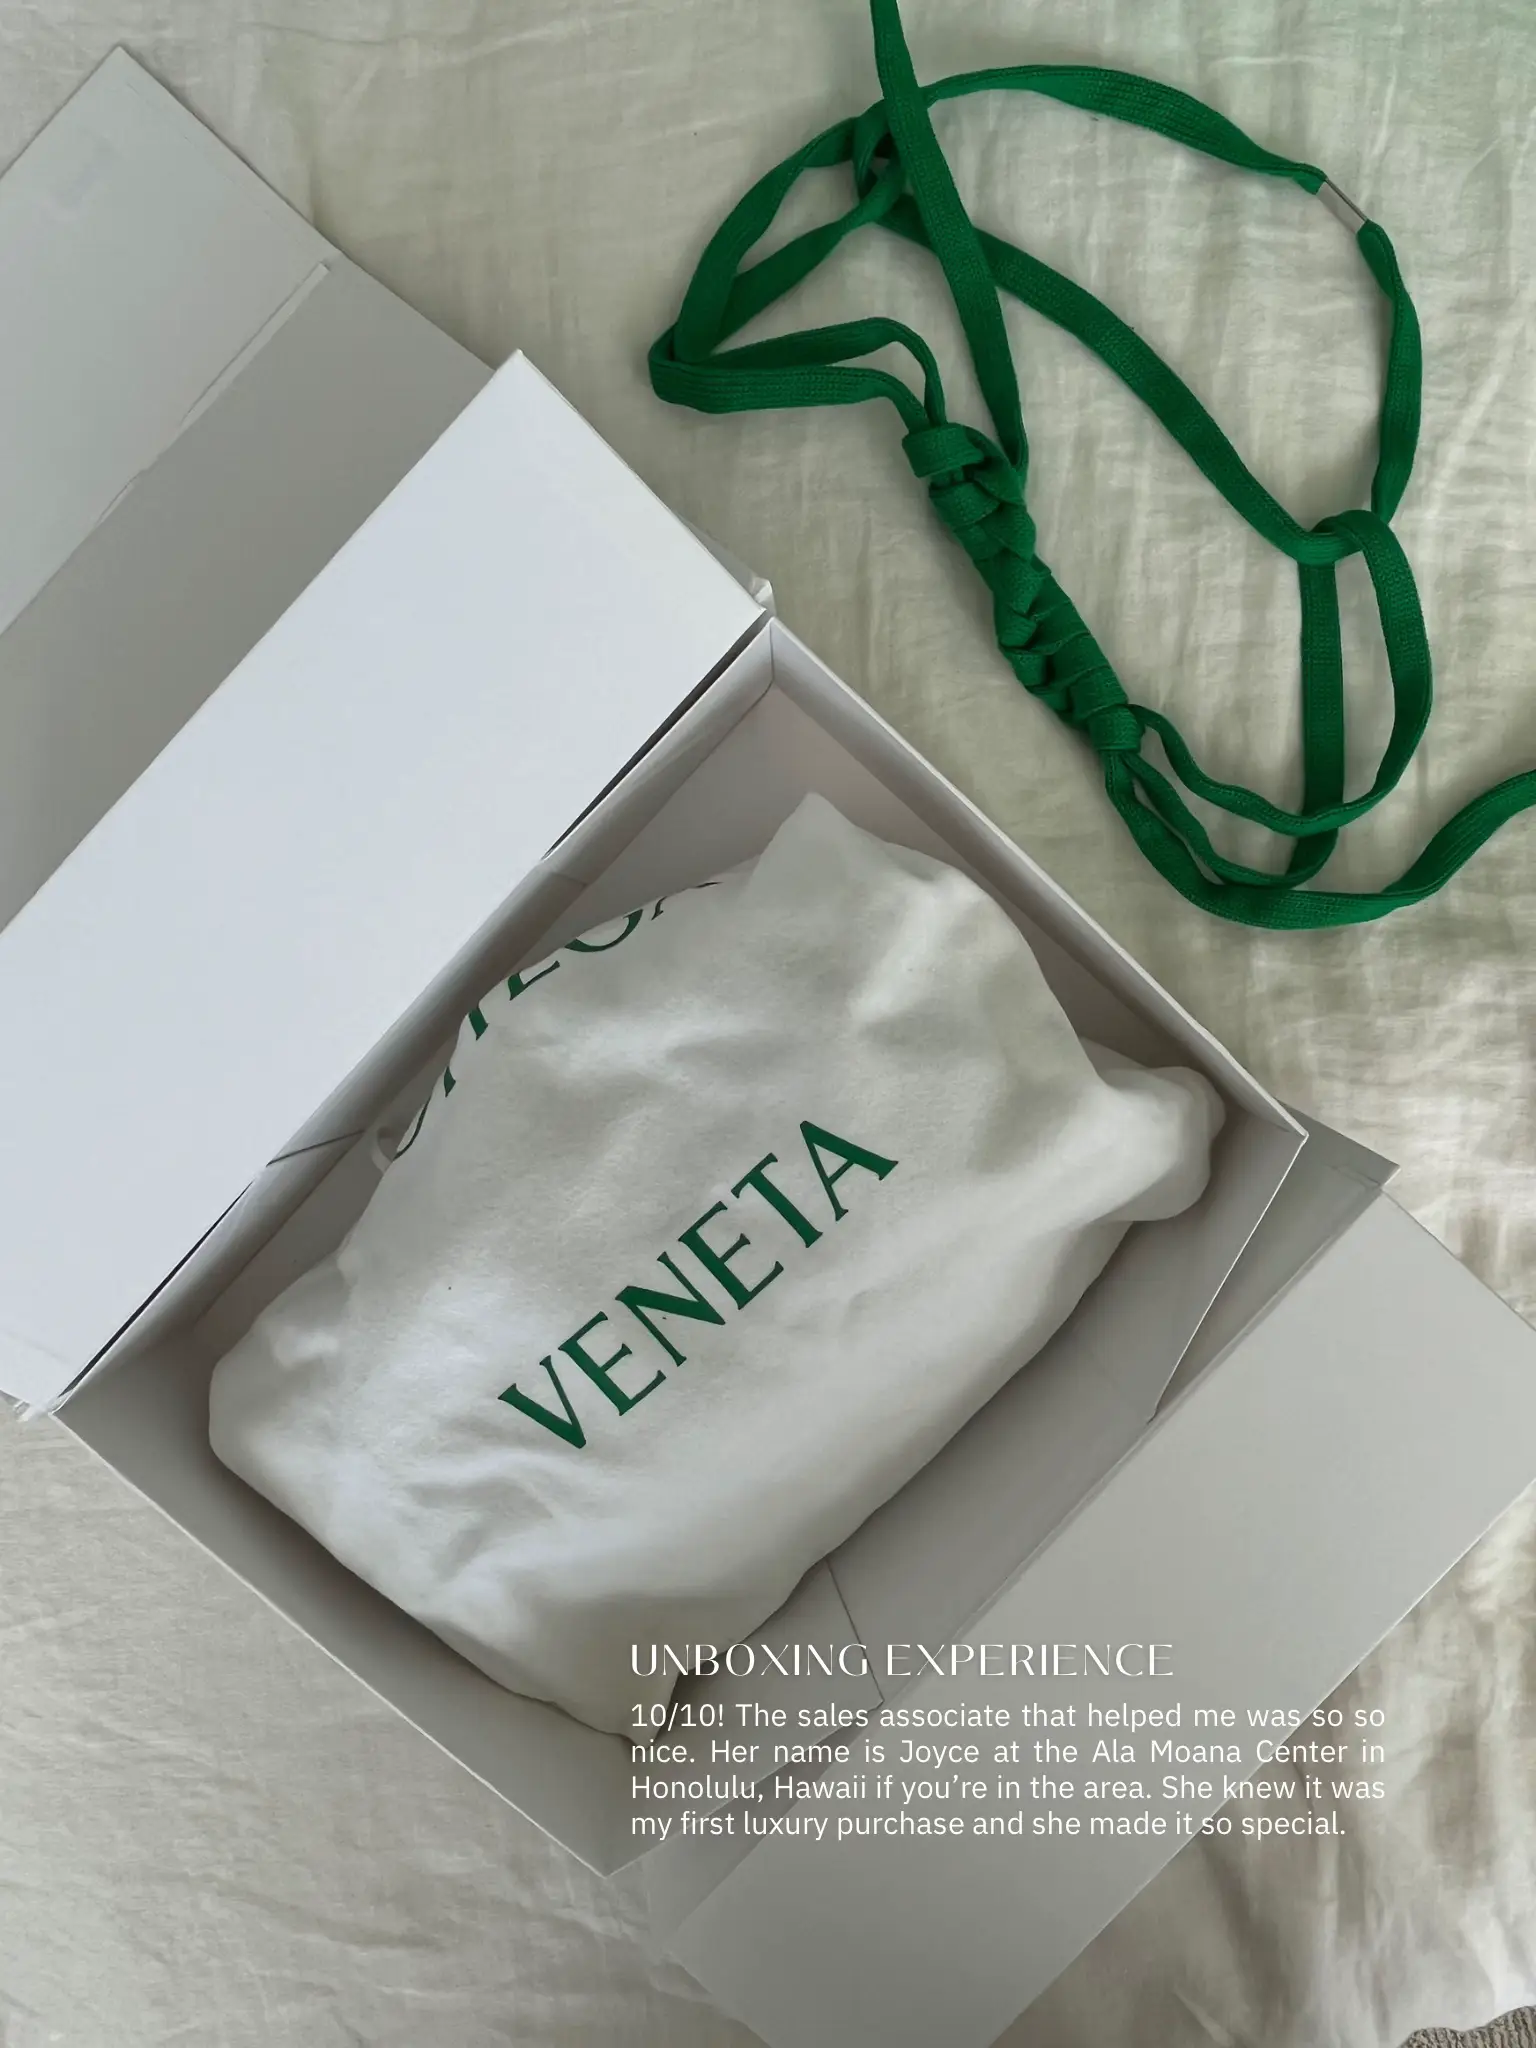 Bottega Veneta Small Loop Bag, Unboxing